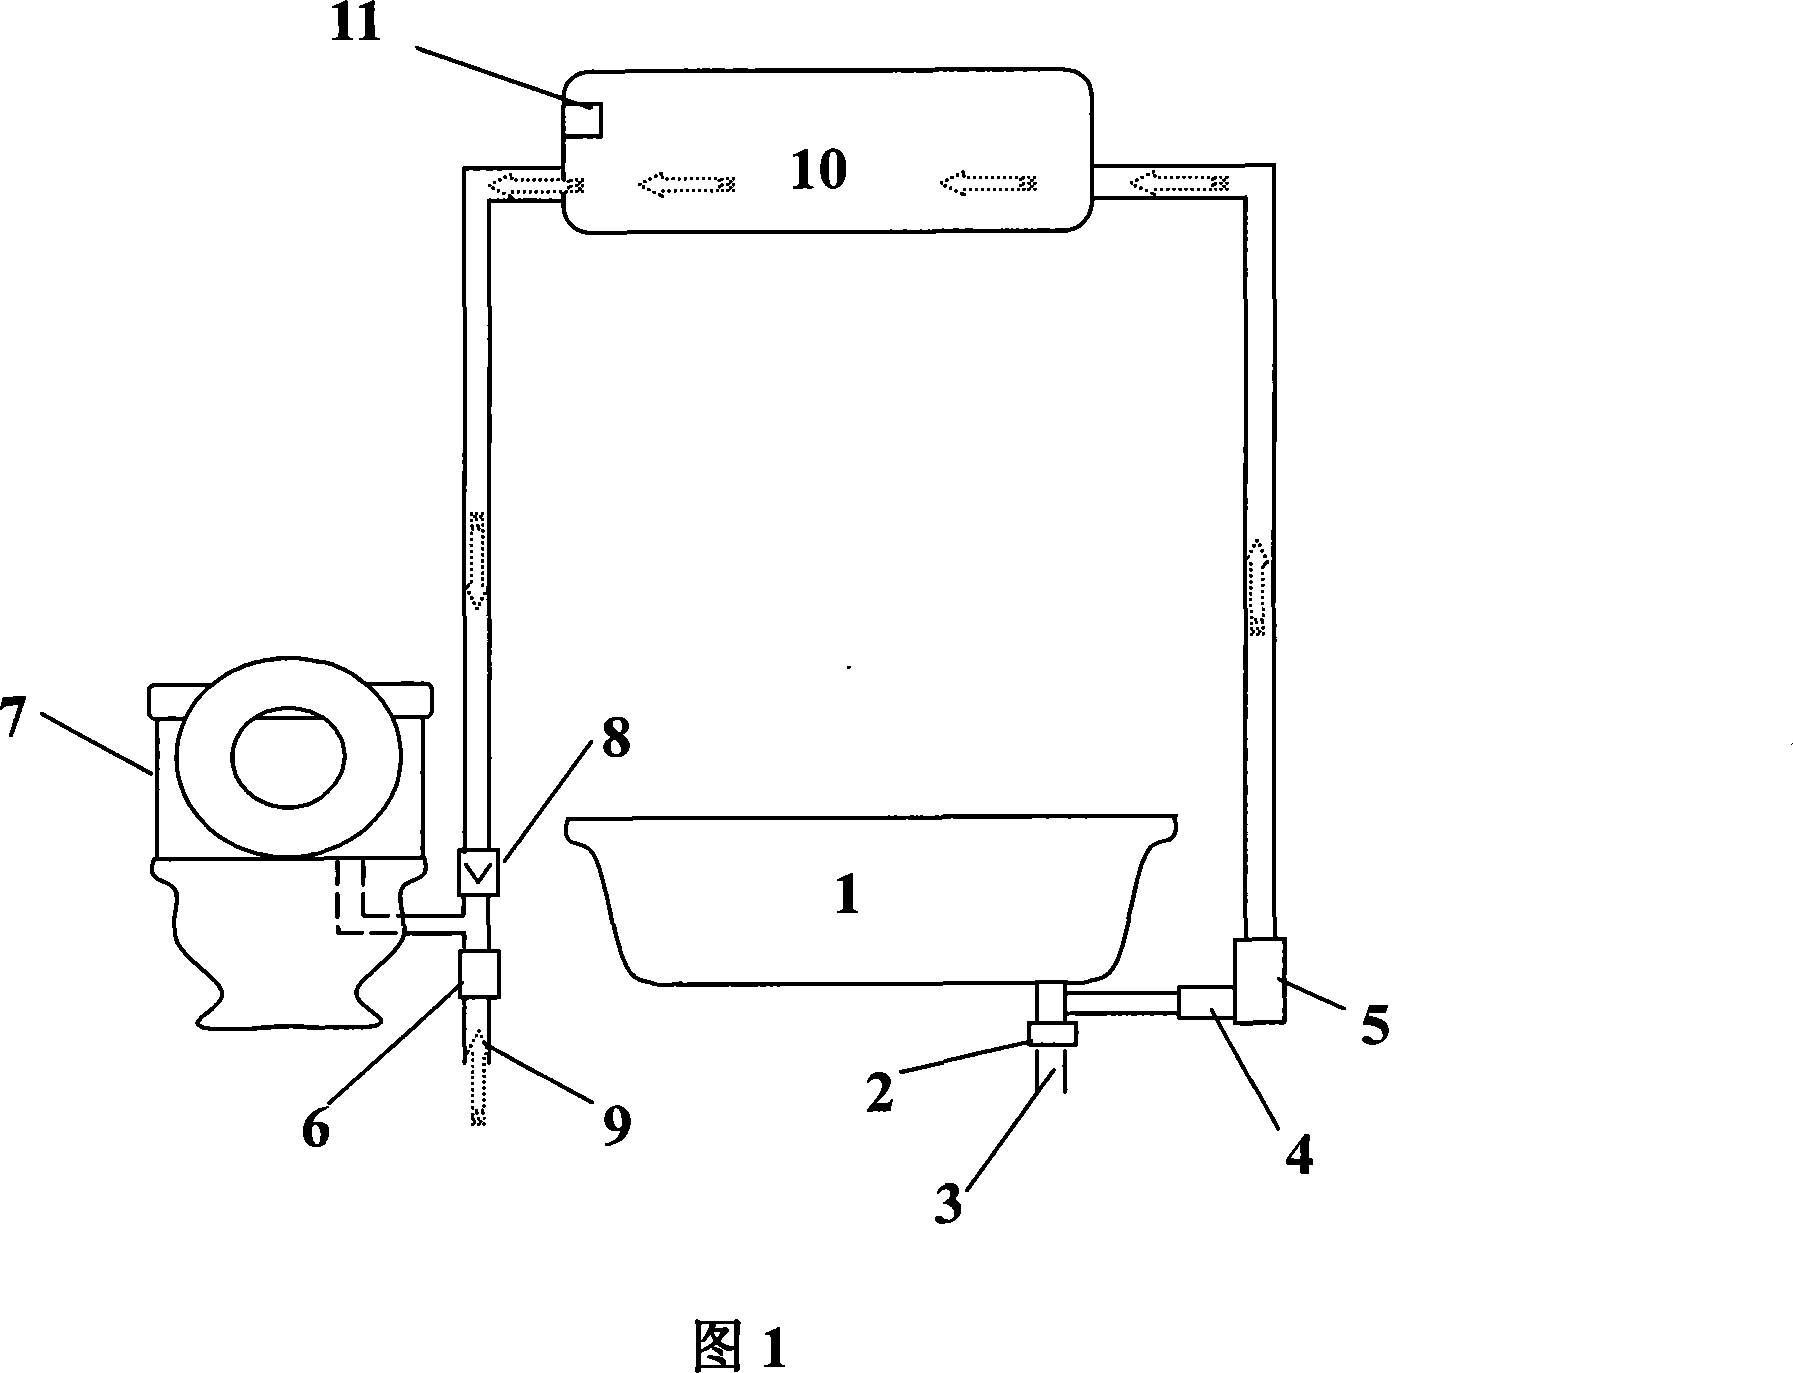 Domestic water-storage apparatus